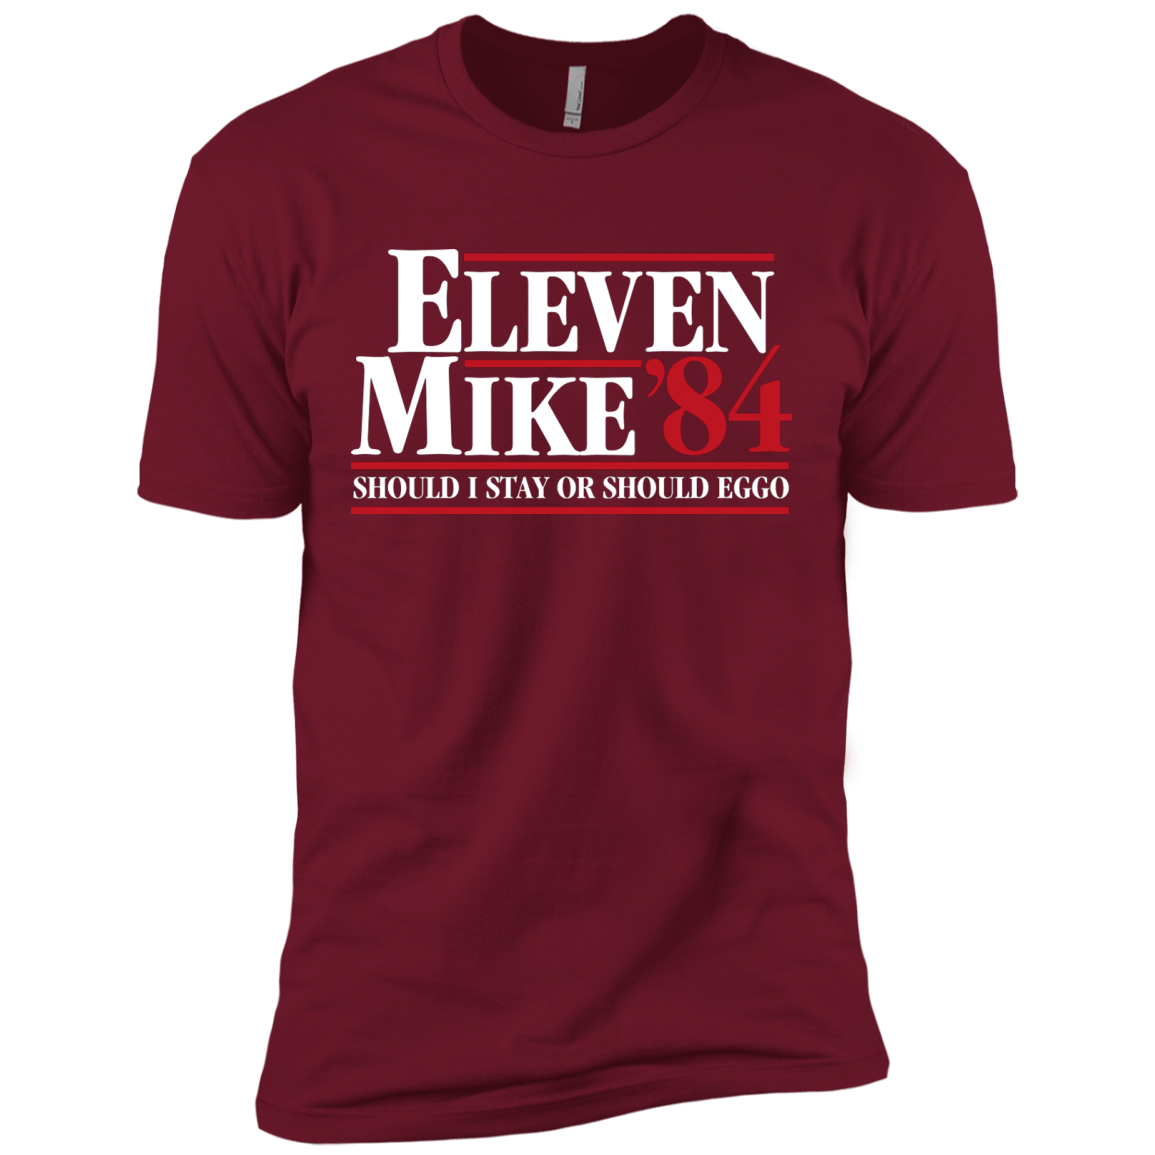 T-Shirts Cardinal / X-Small Eleven Mike 84 - Should I Stay or Should Eggo Men's Premium T-Shirt